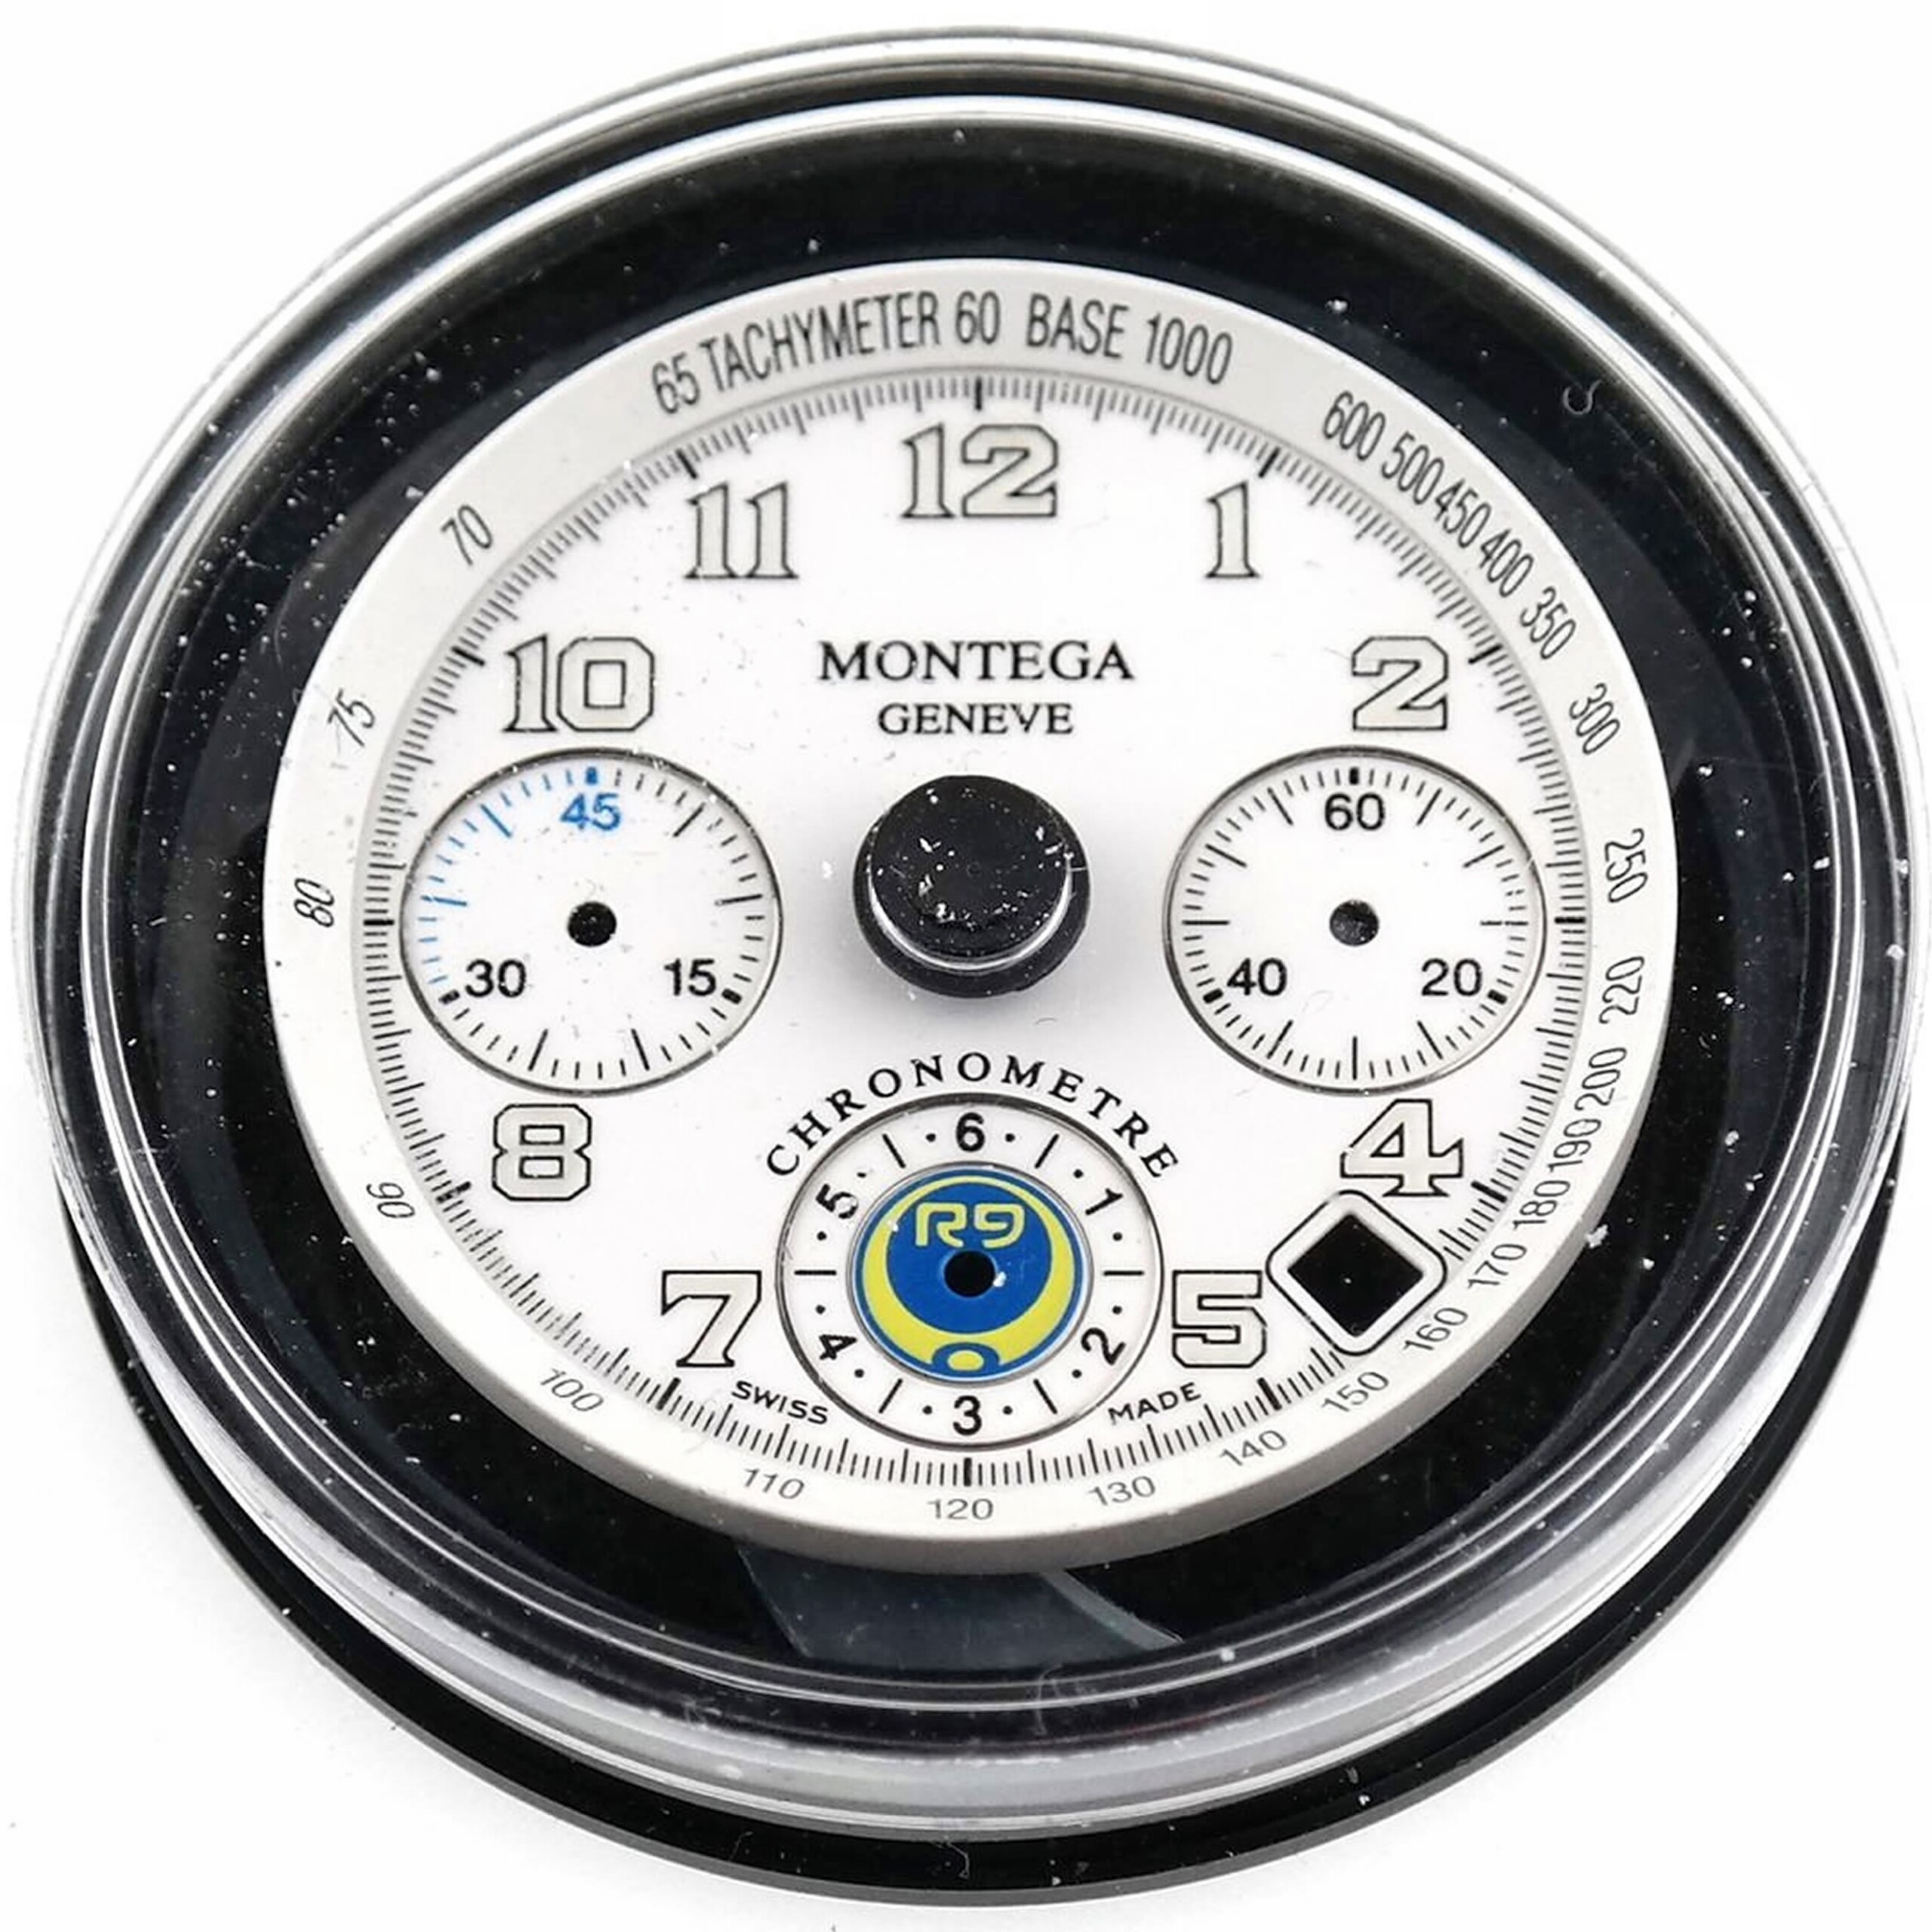 MONTEGA Geneve - MC01 Automatic Chronograph - Watch Dial - White